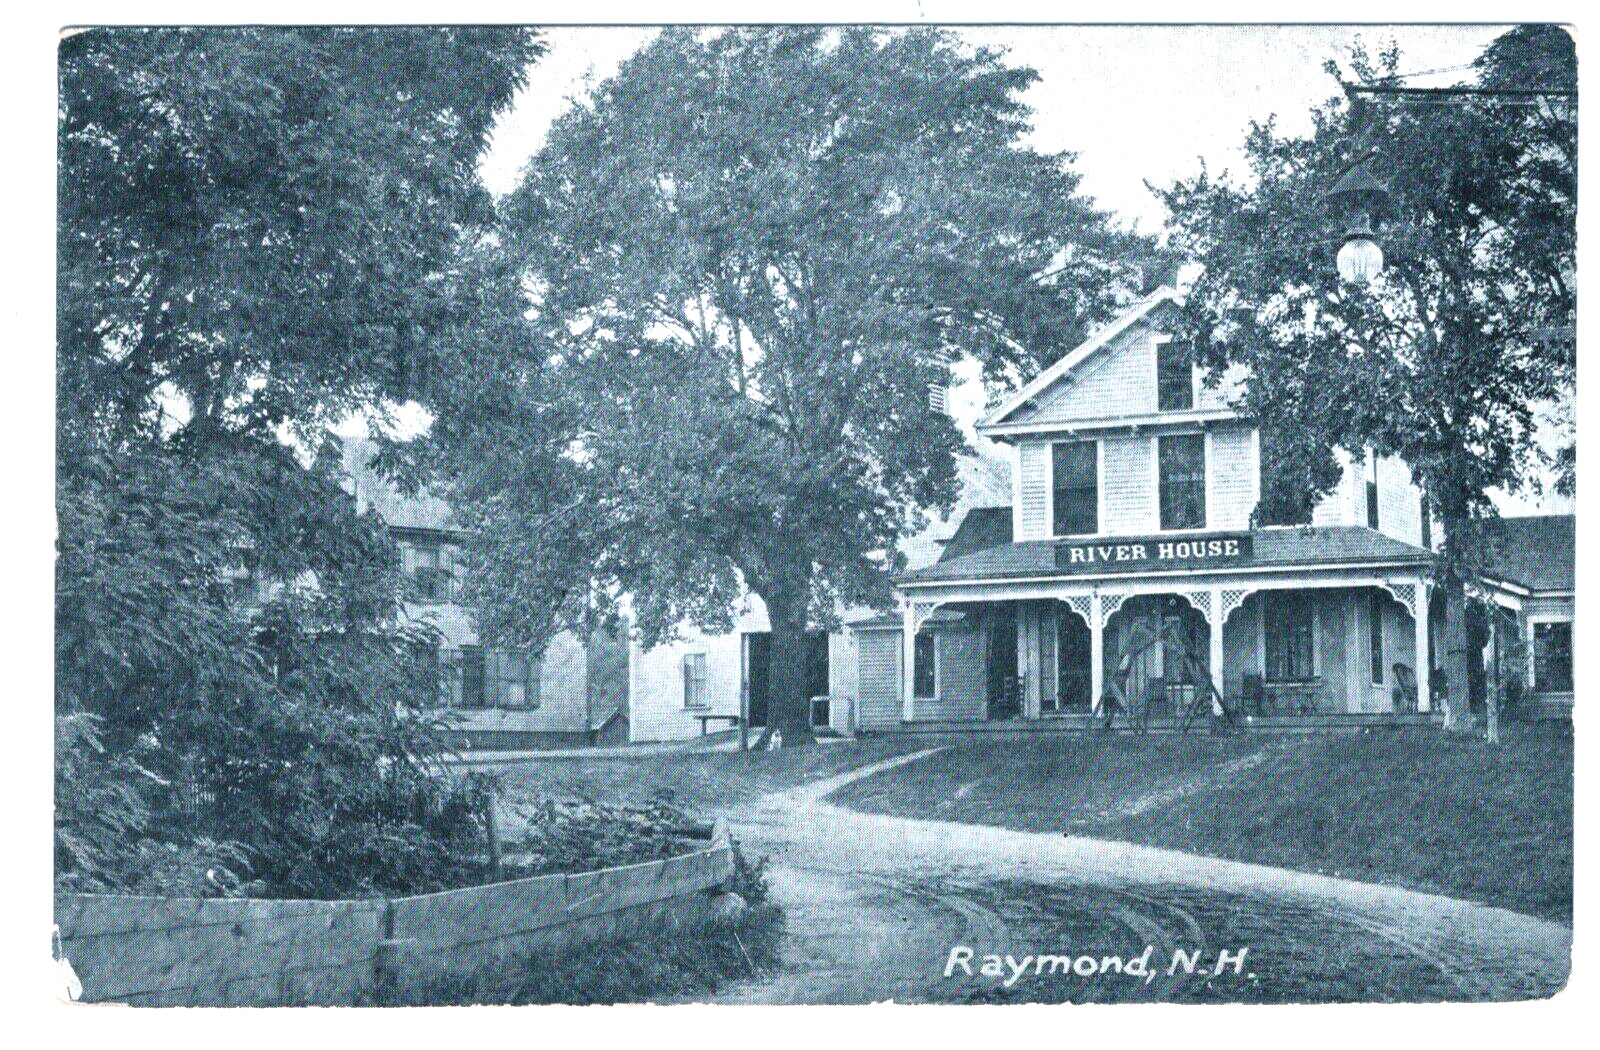 Raymond NH River House Restaurant ? Vintage Photo Postcard Rockingham County